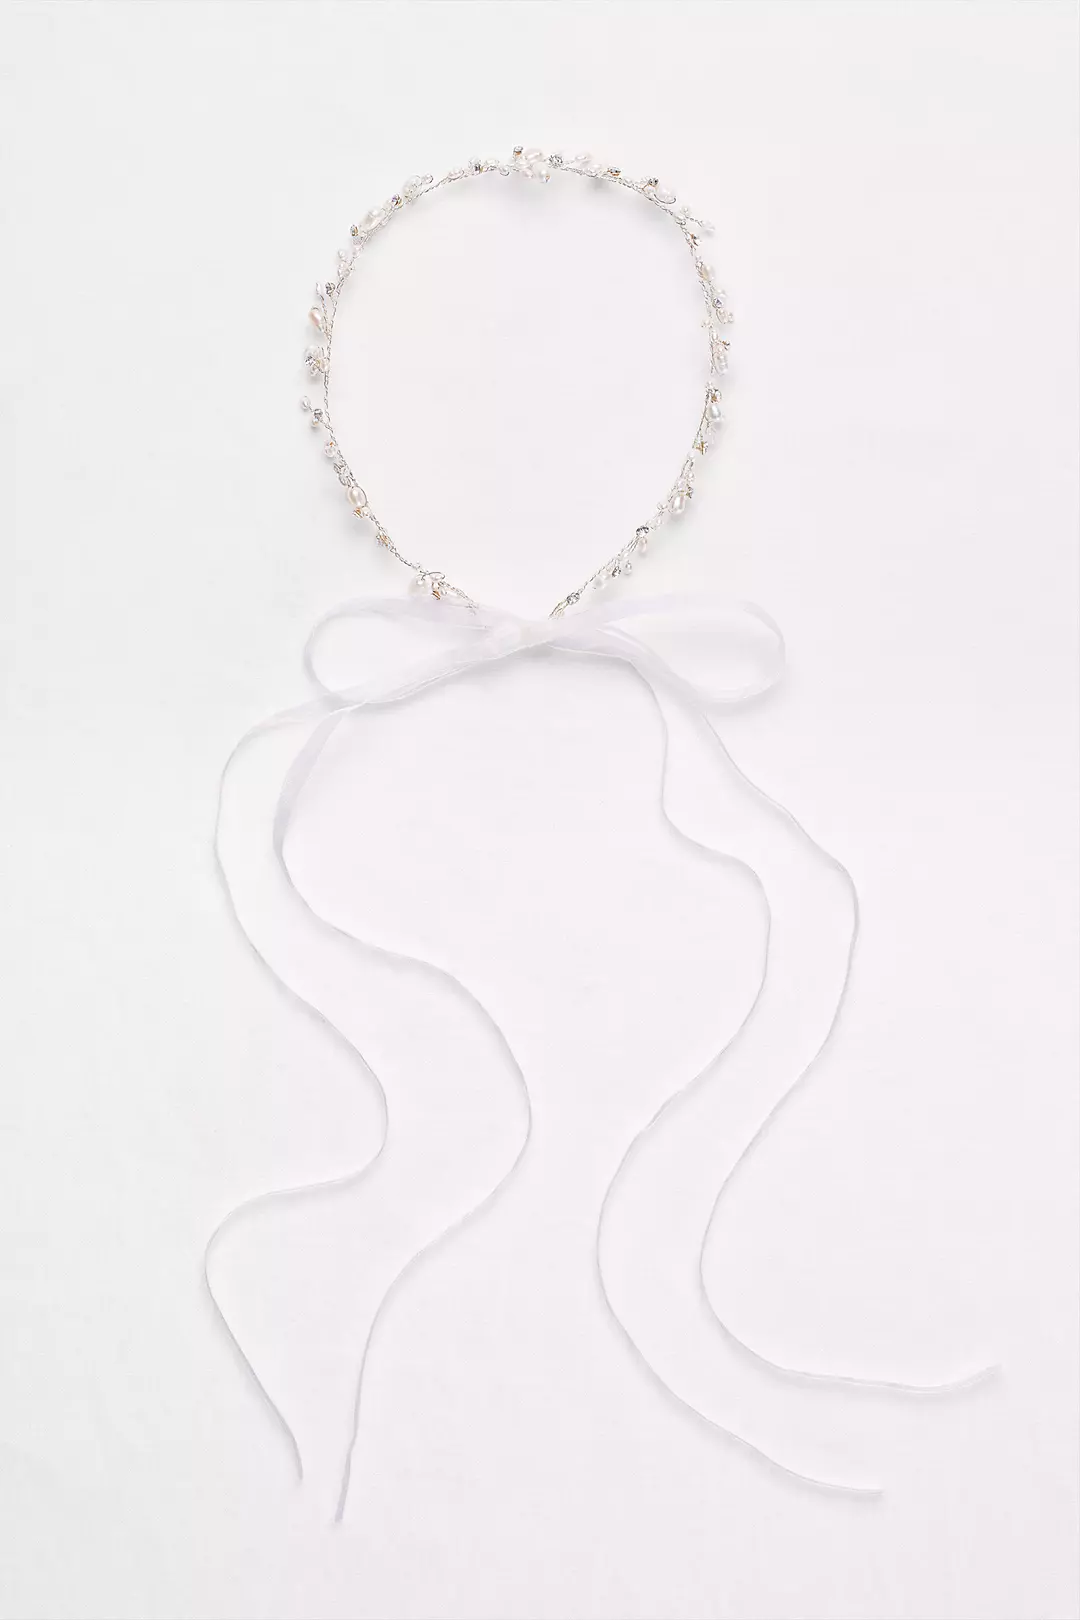 Freshwater Pearl and Crystal Sprig Ribbon Headband Image 2